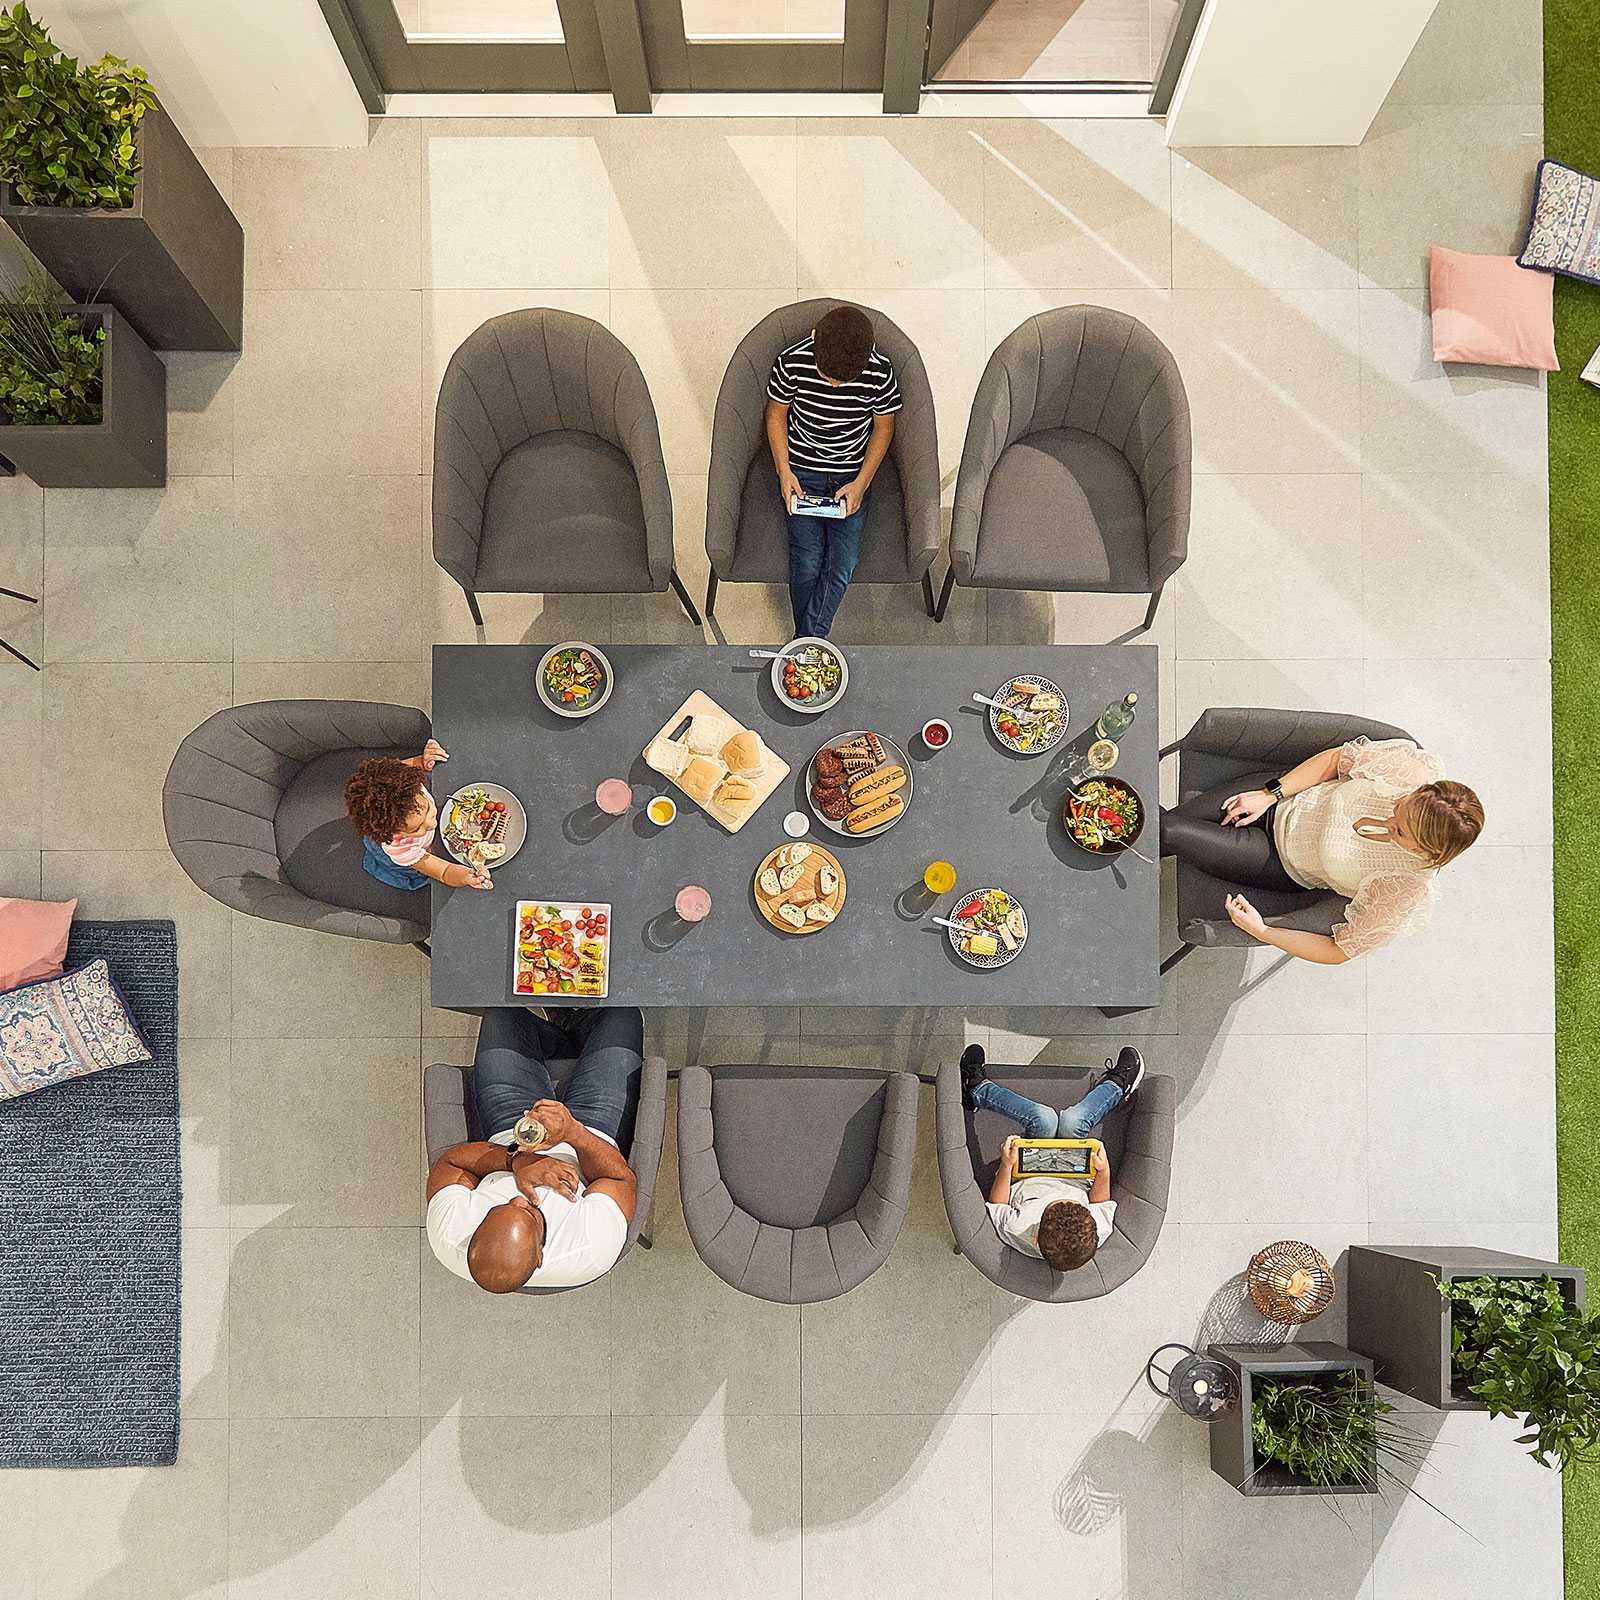 Edge Outdoor Fabric 8 Seat Rectangular Dining Set by Nova